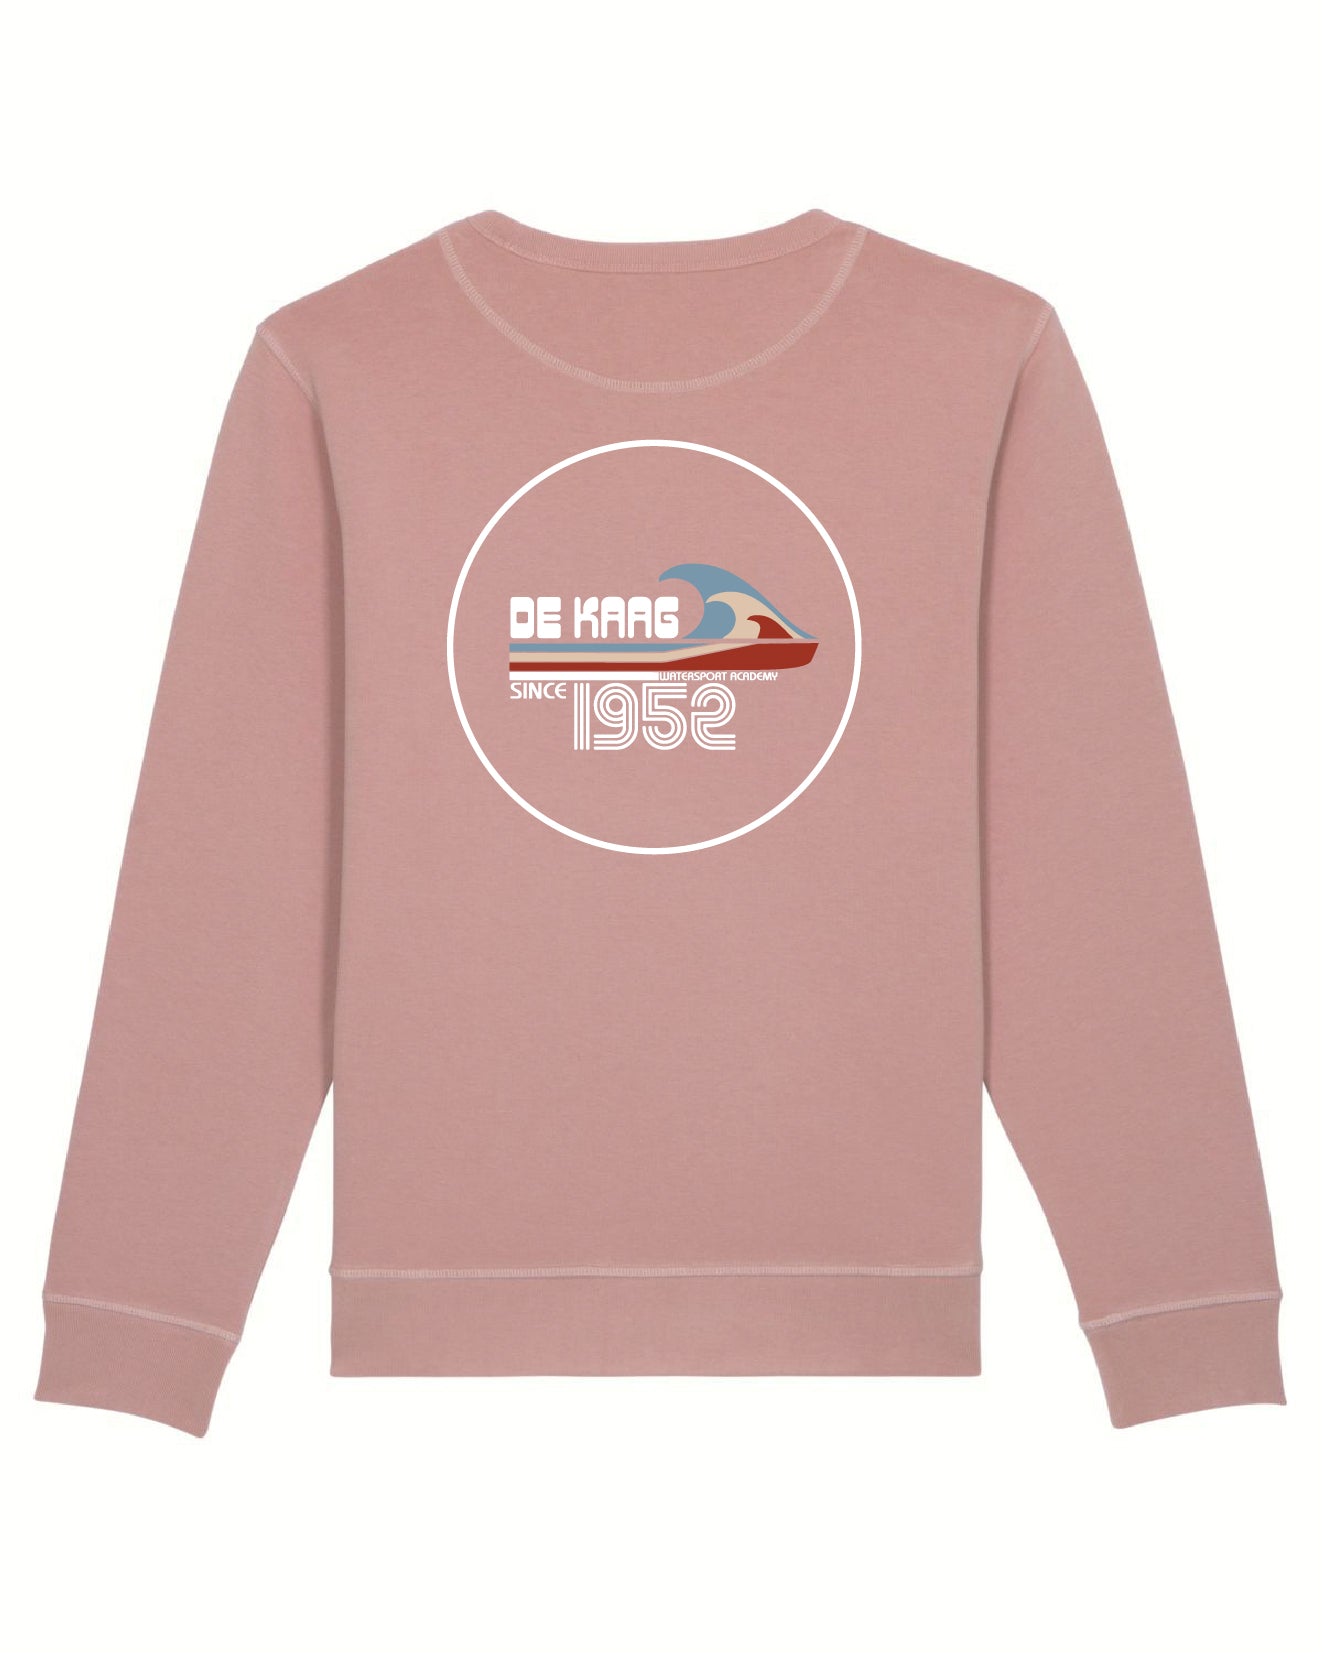 Sweater memories - Canyon Pink